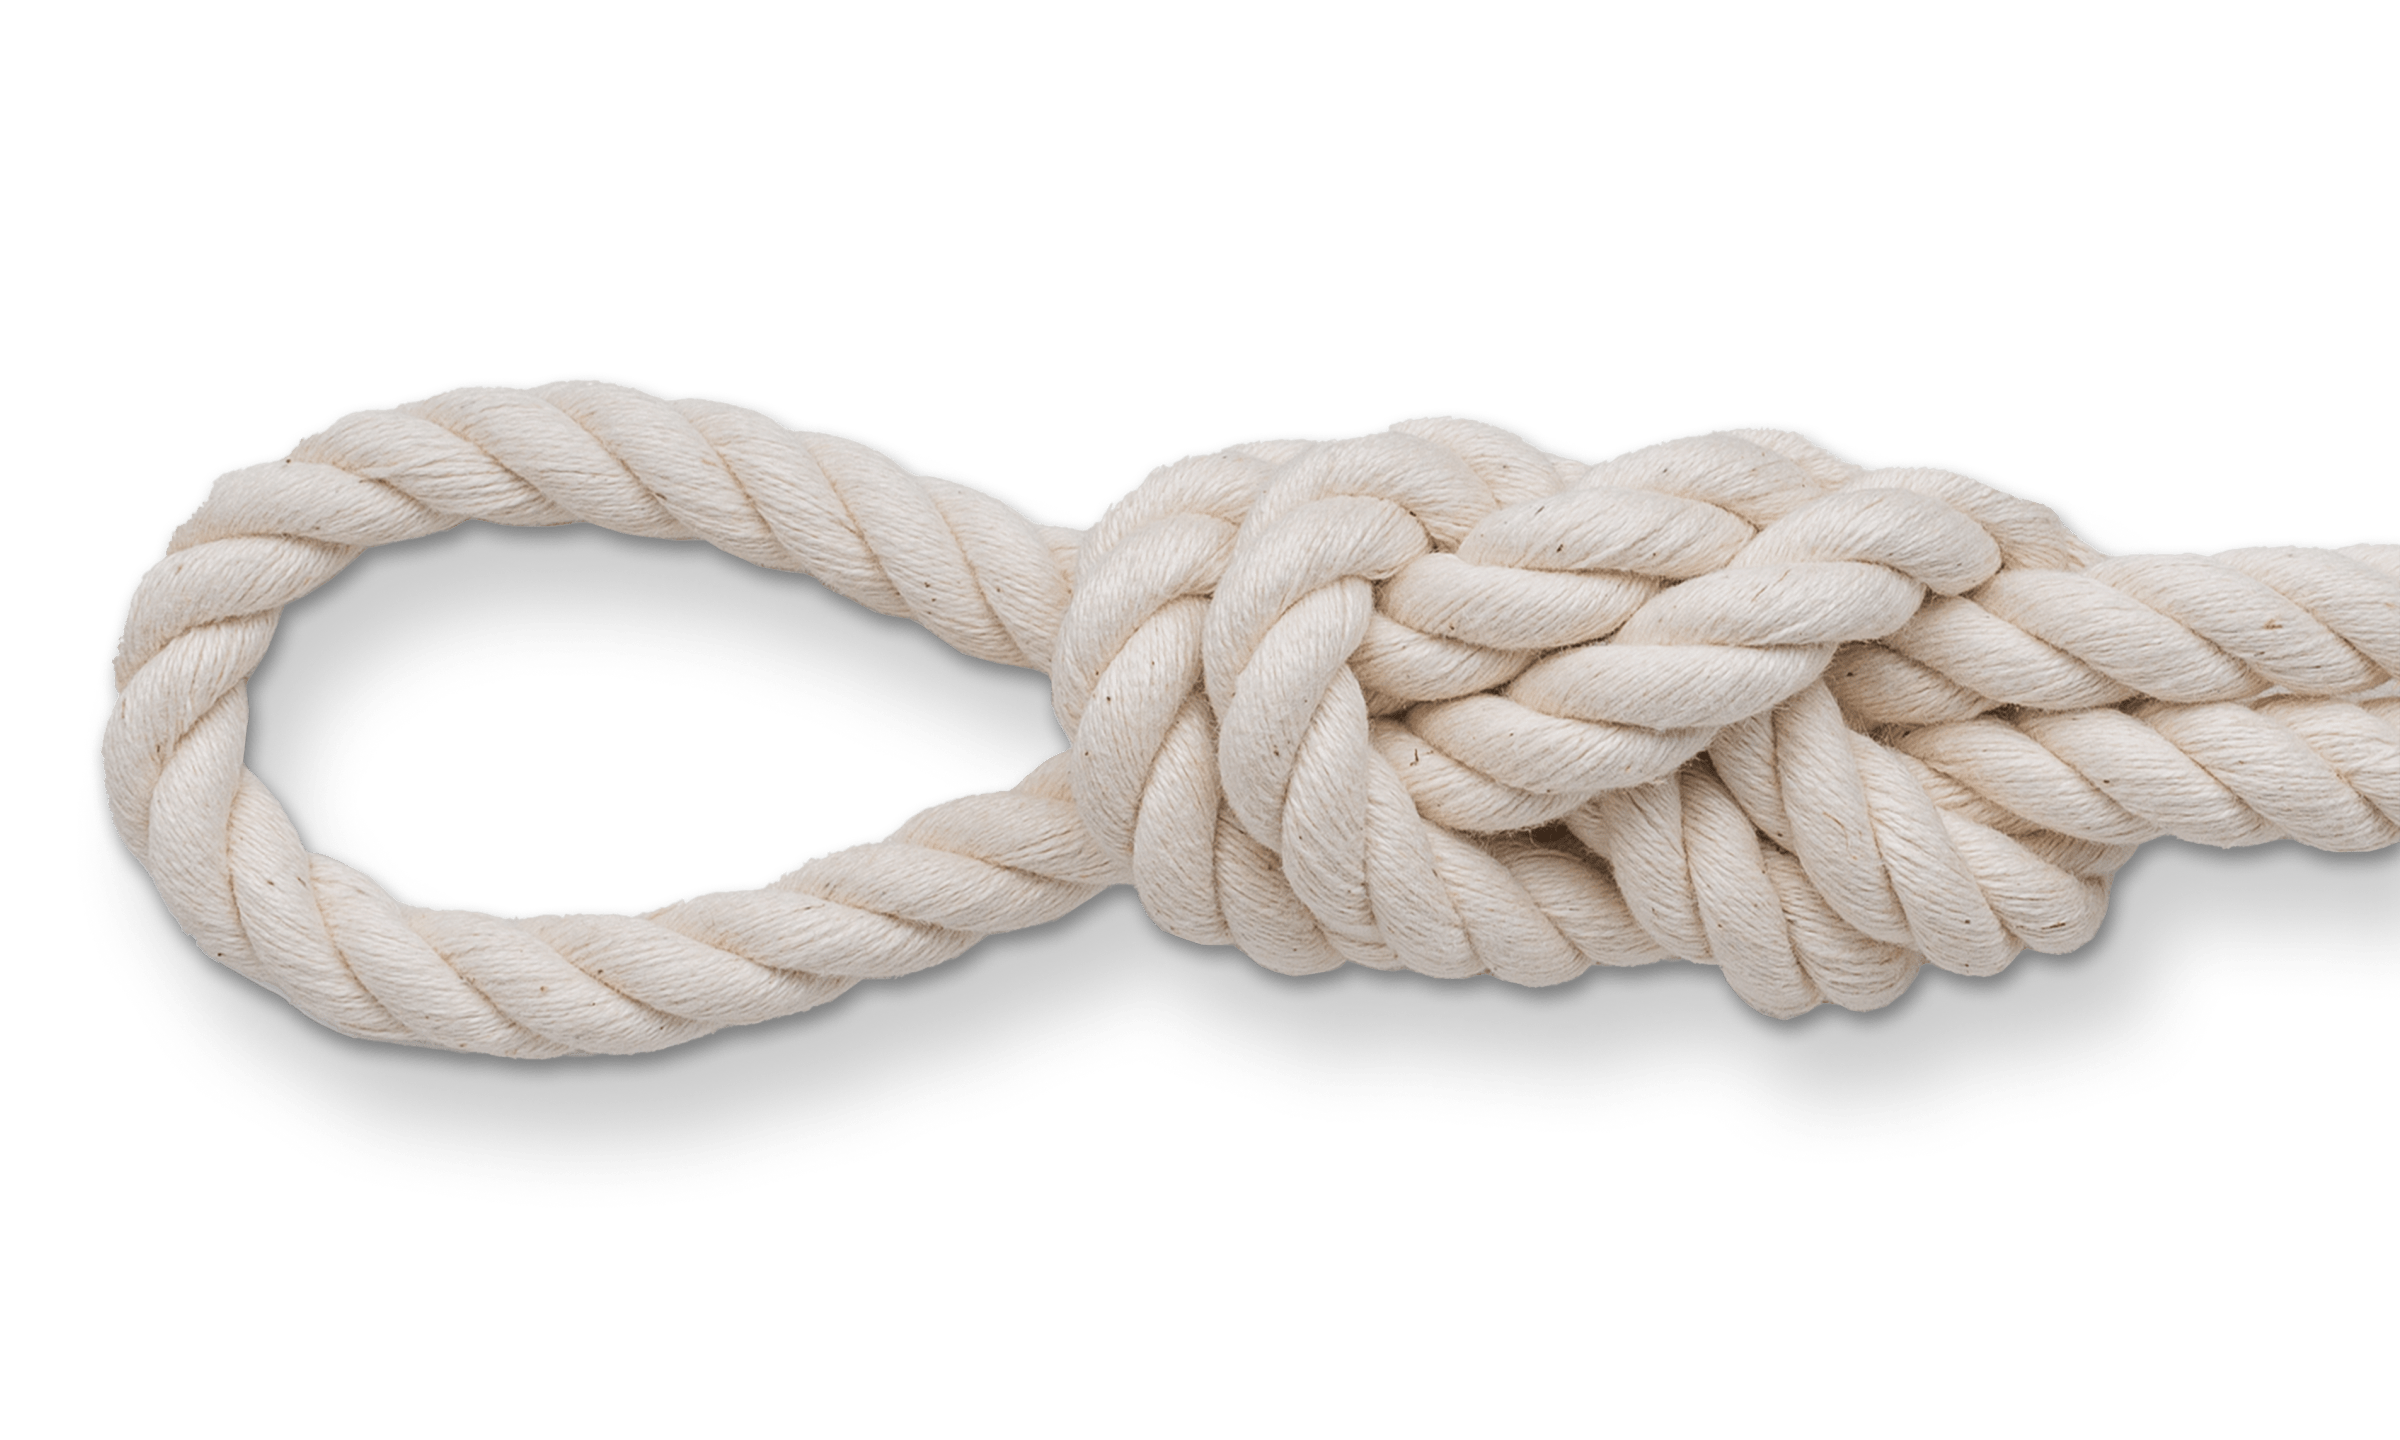 Nautical Rope for Crafts 100 Feet 5mm, Thick Hemp Jute Twine, Brown - Yarn